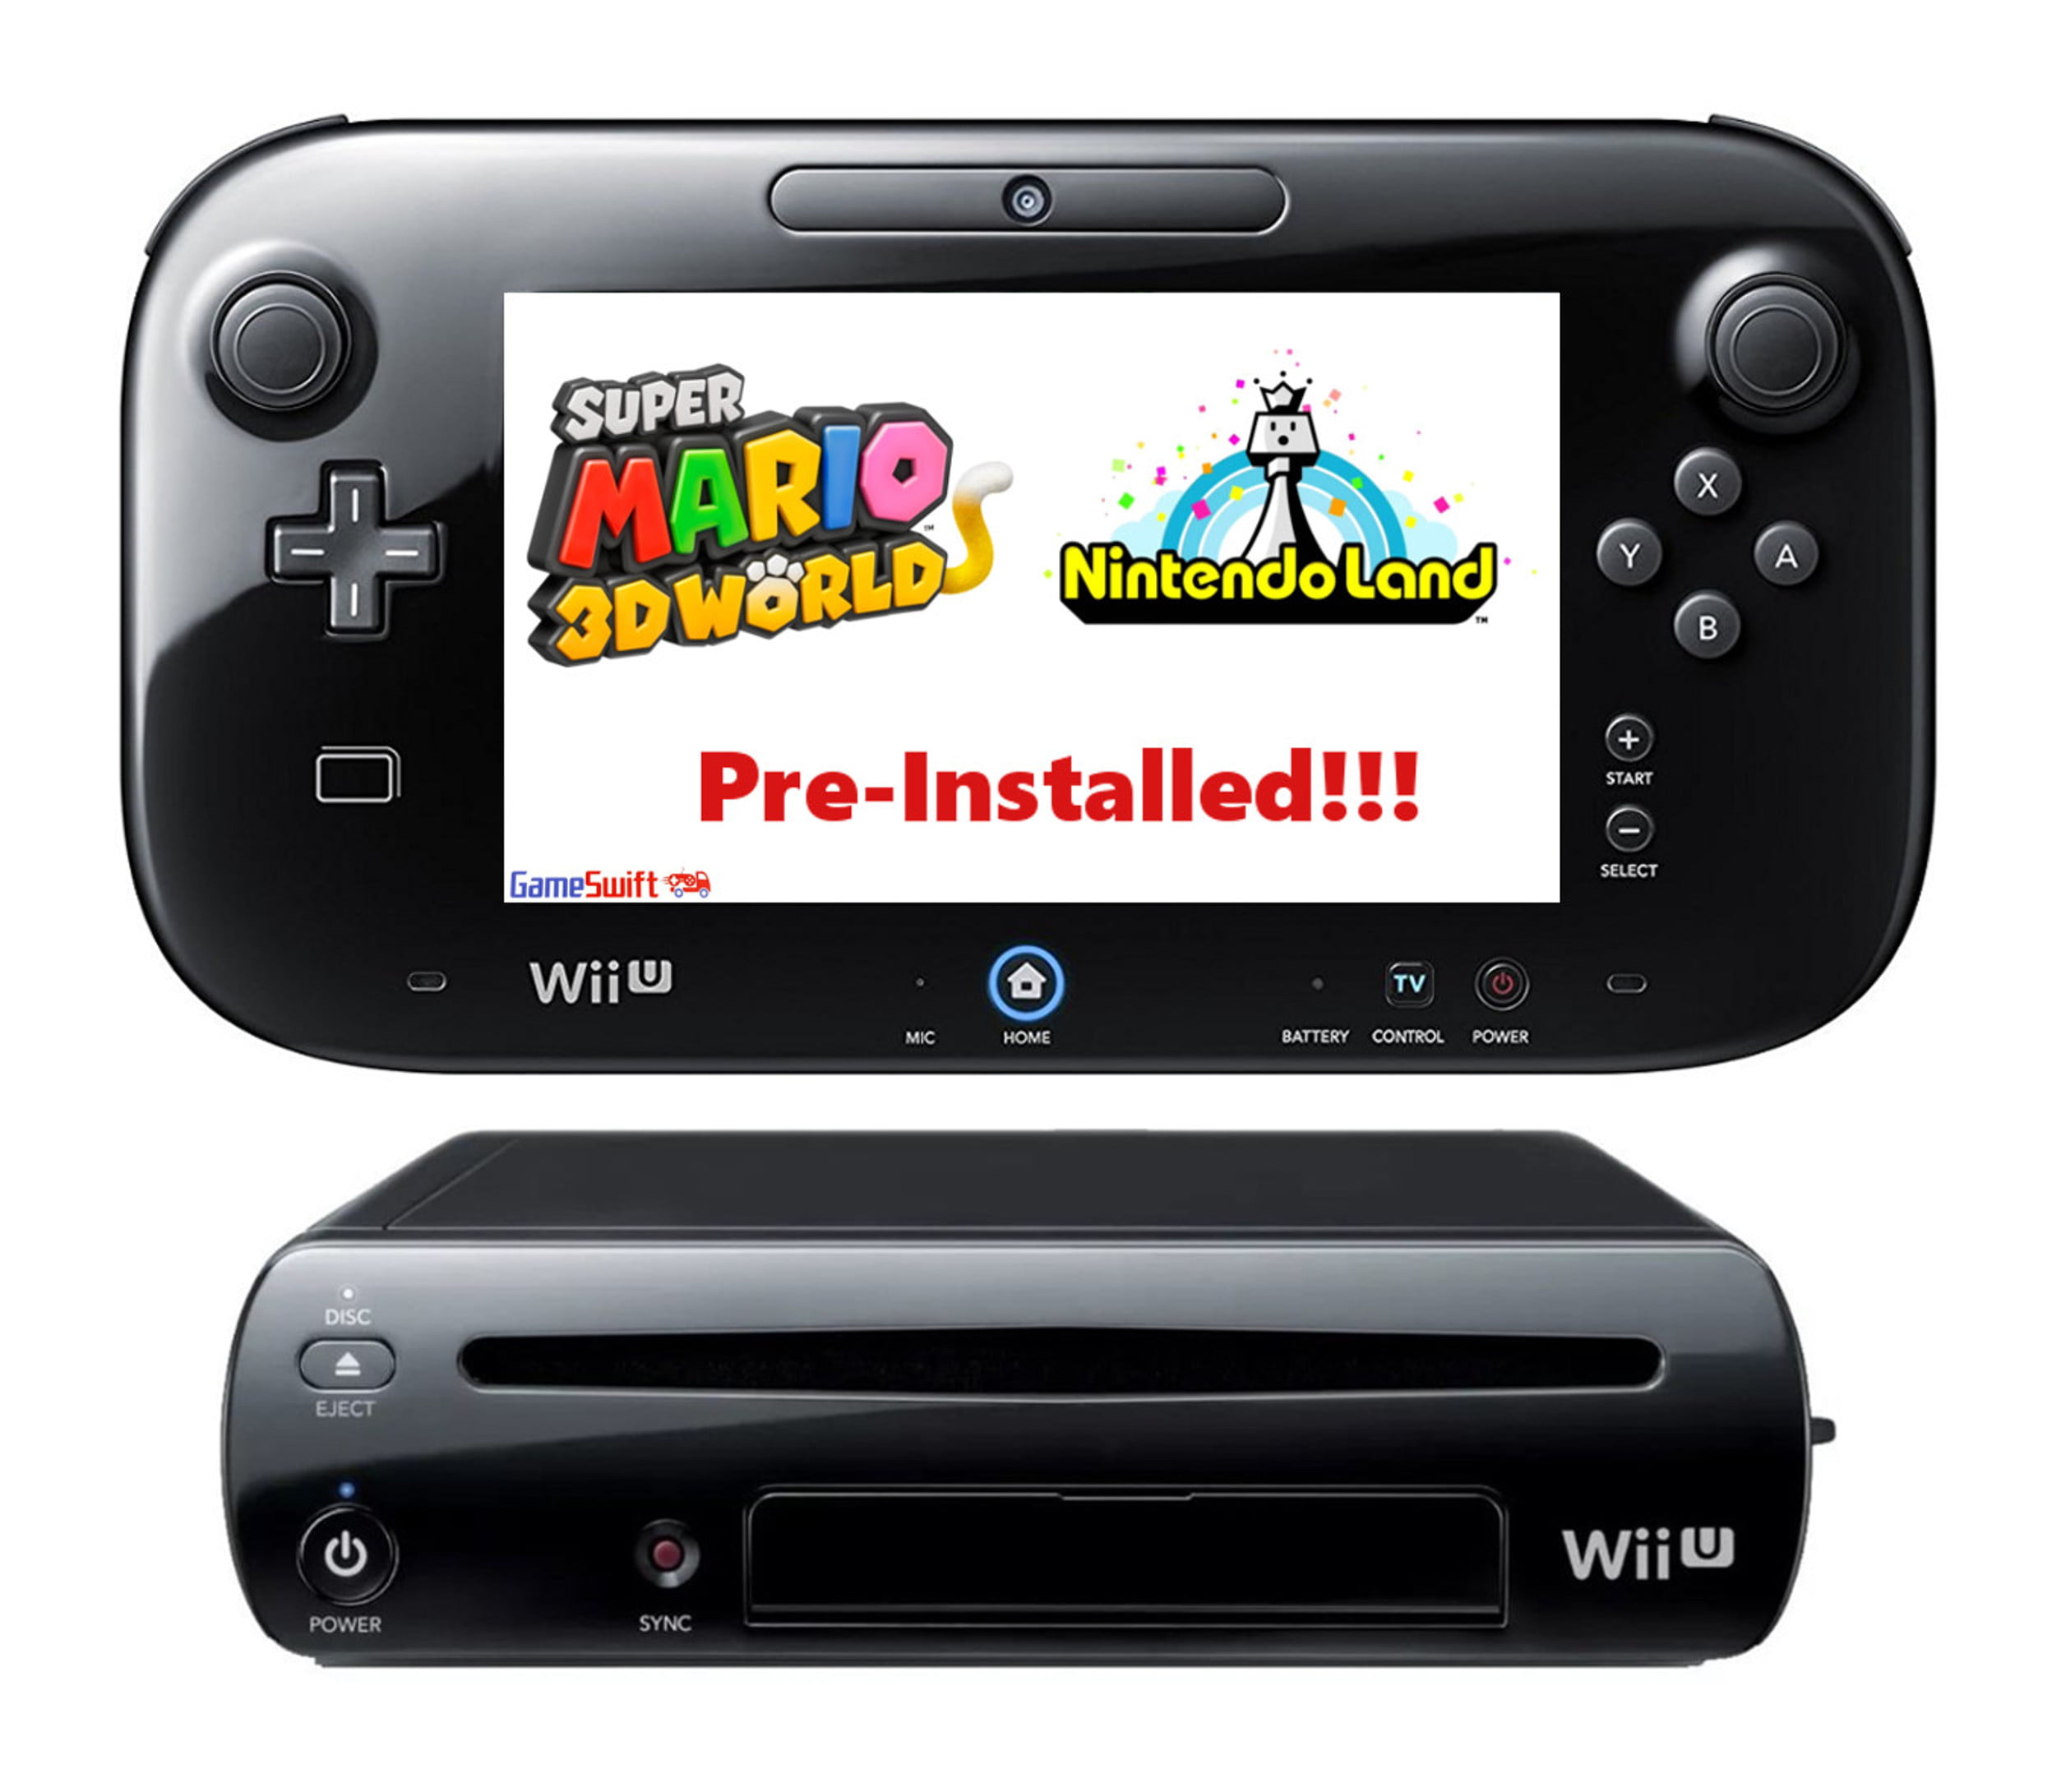 Refurbished Nintendo Wii U Wiiu 8gb Console With New Super Mario Bros U Game Walmart Com